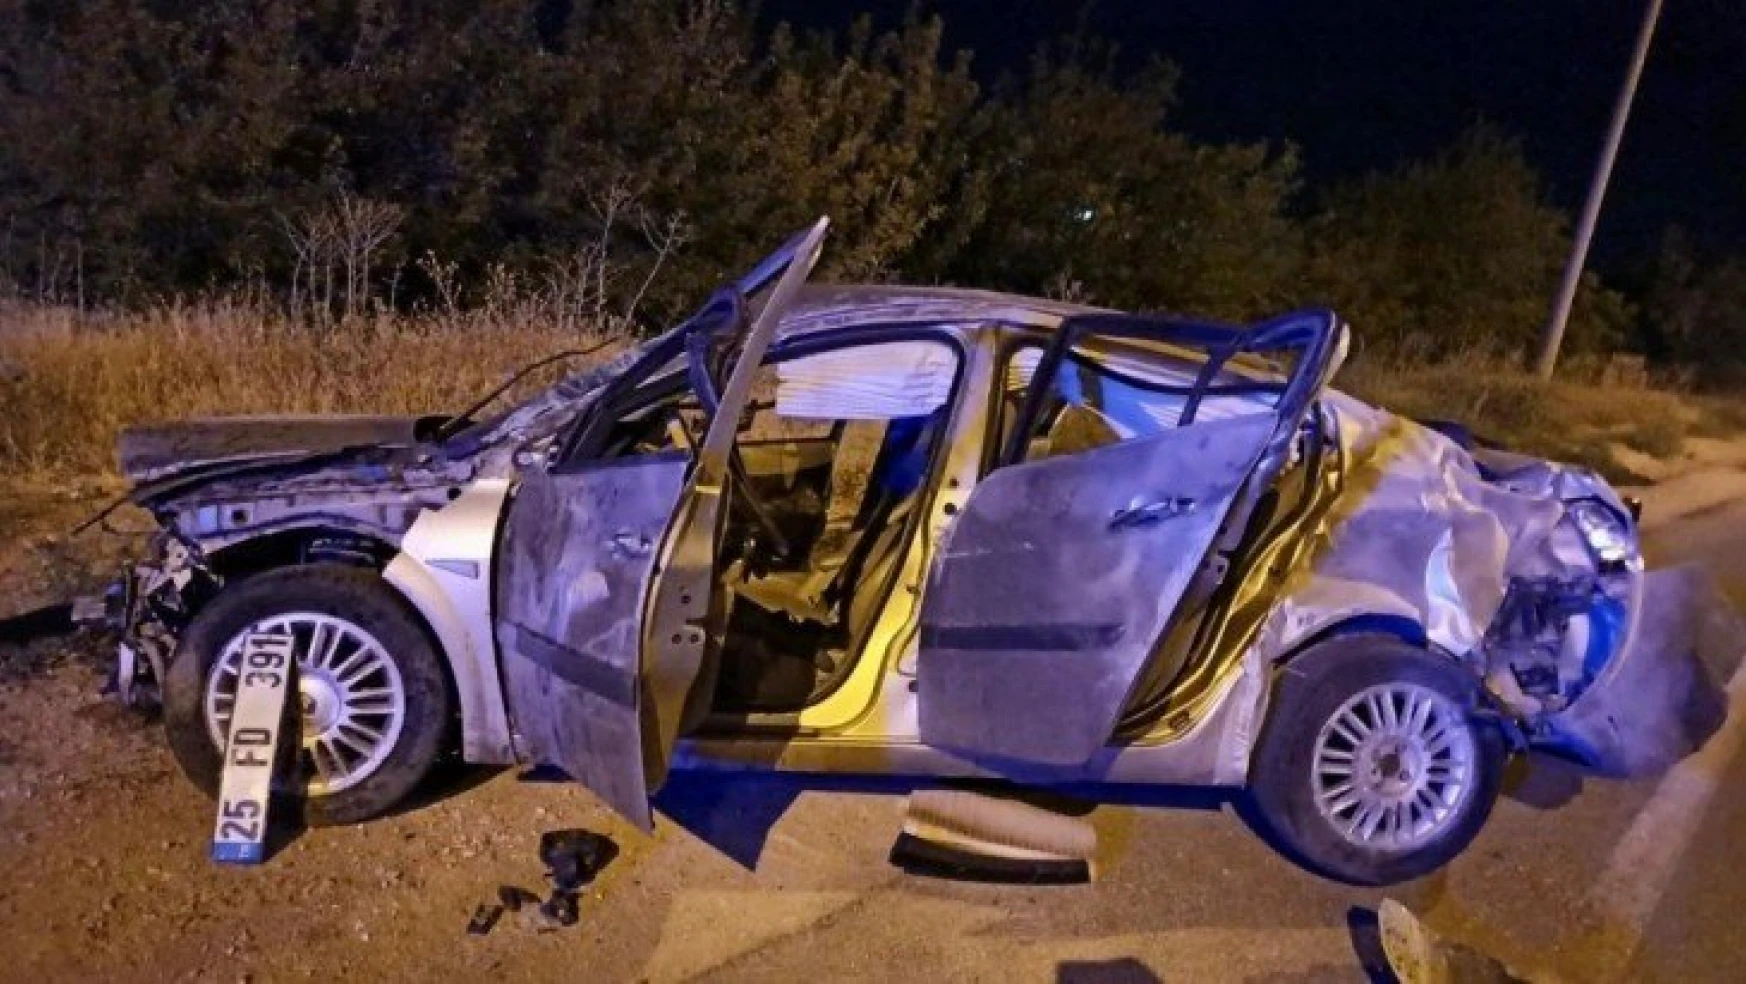 Elazığ'da otomobil takla attı: 3 yaralı